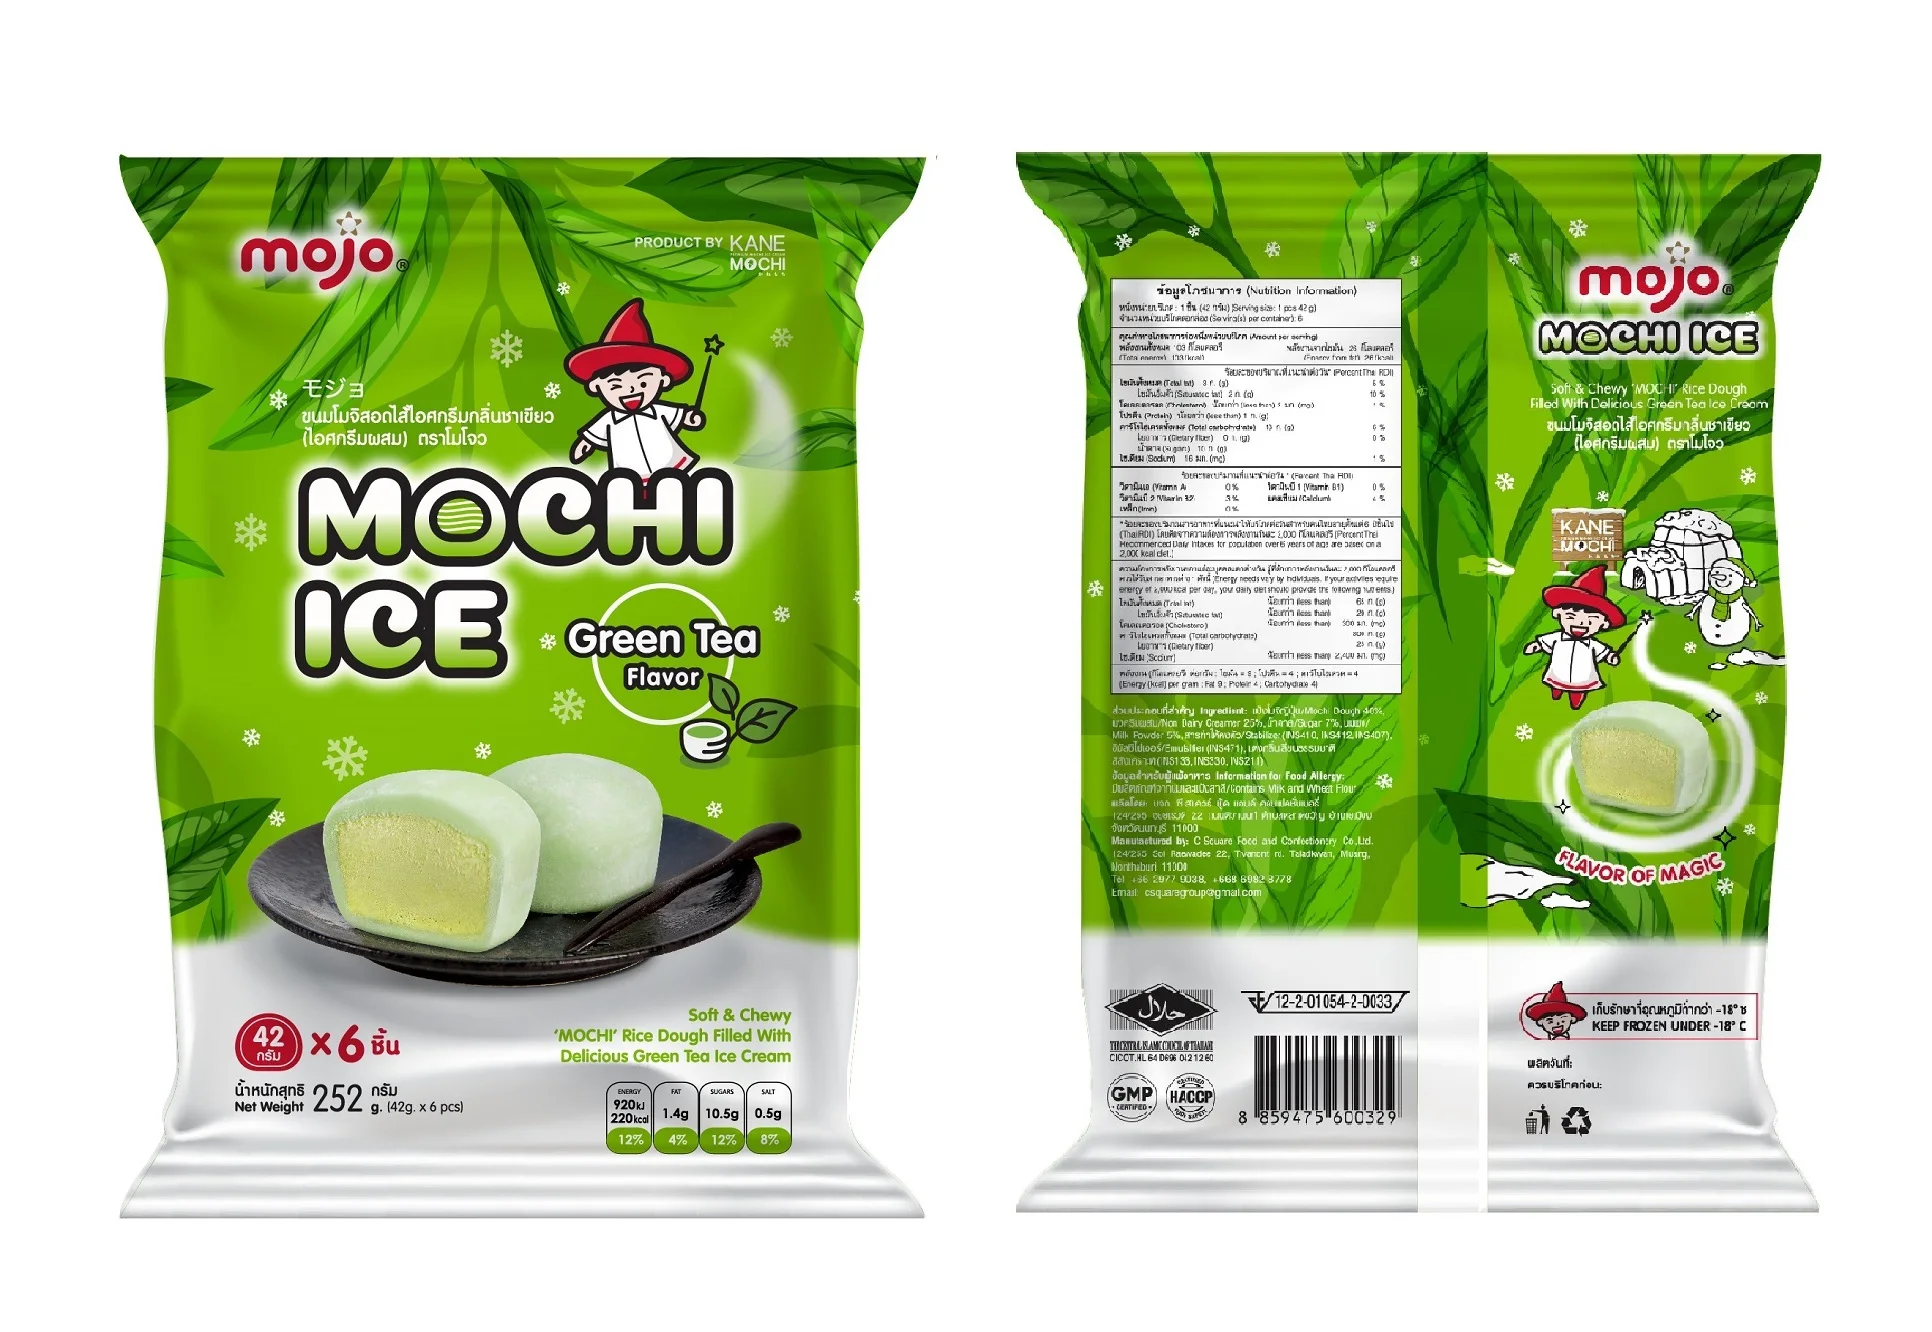 Beverage Round Ball Rice Dough Milk Soft Dairy Products MOJO Mochi Ice Cream Green Tea with Matcha Powder